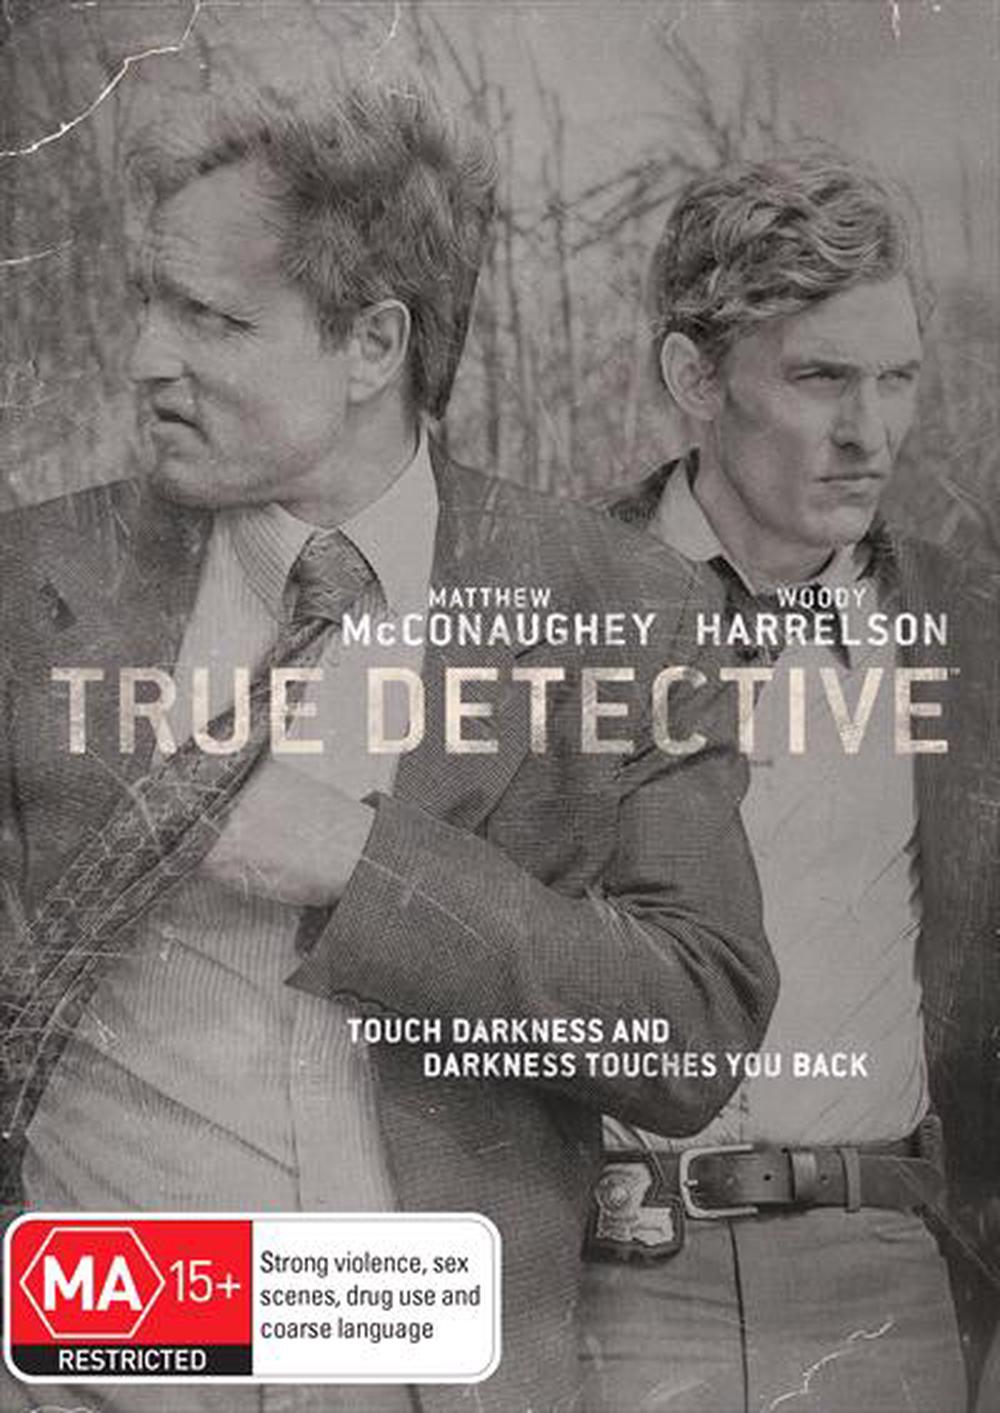 true detective season 1 soundtrack